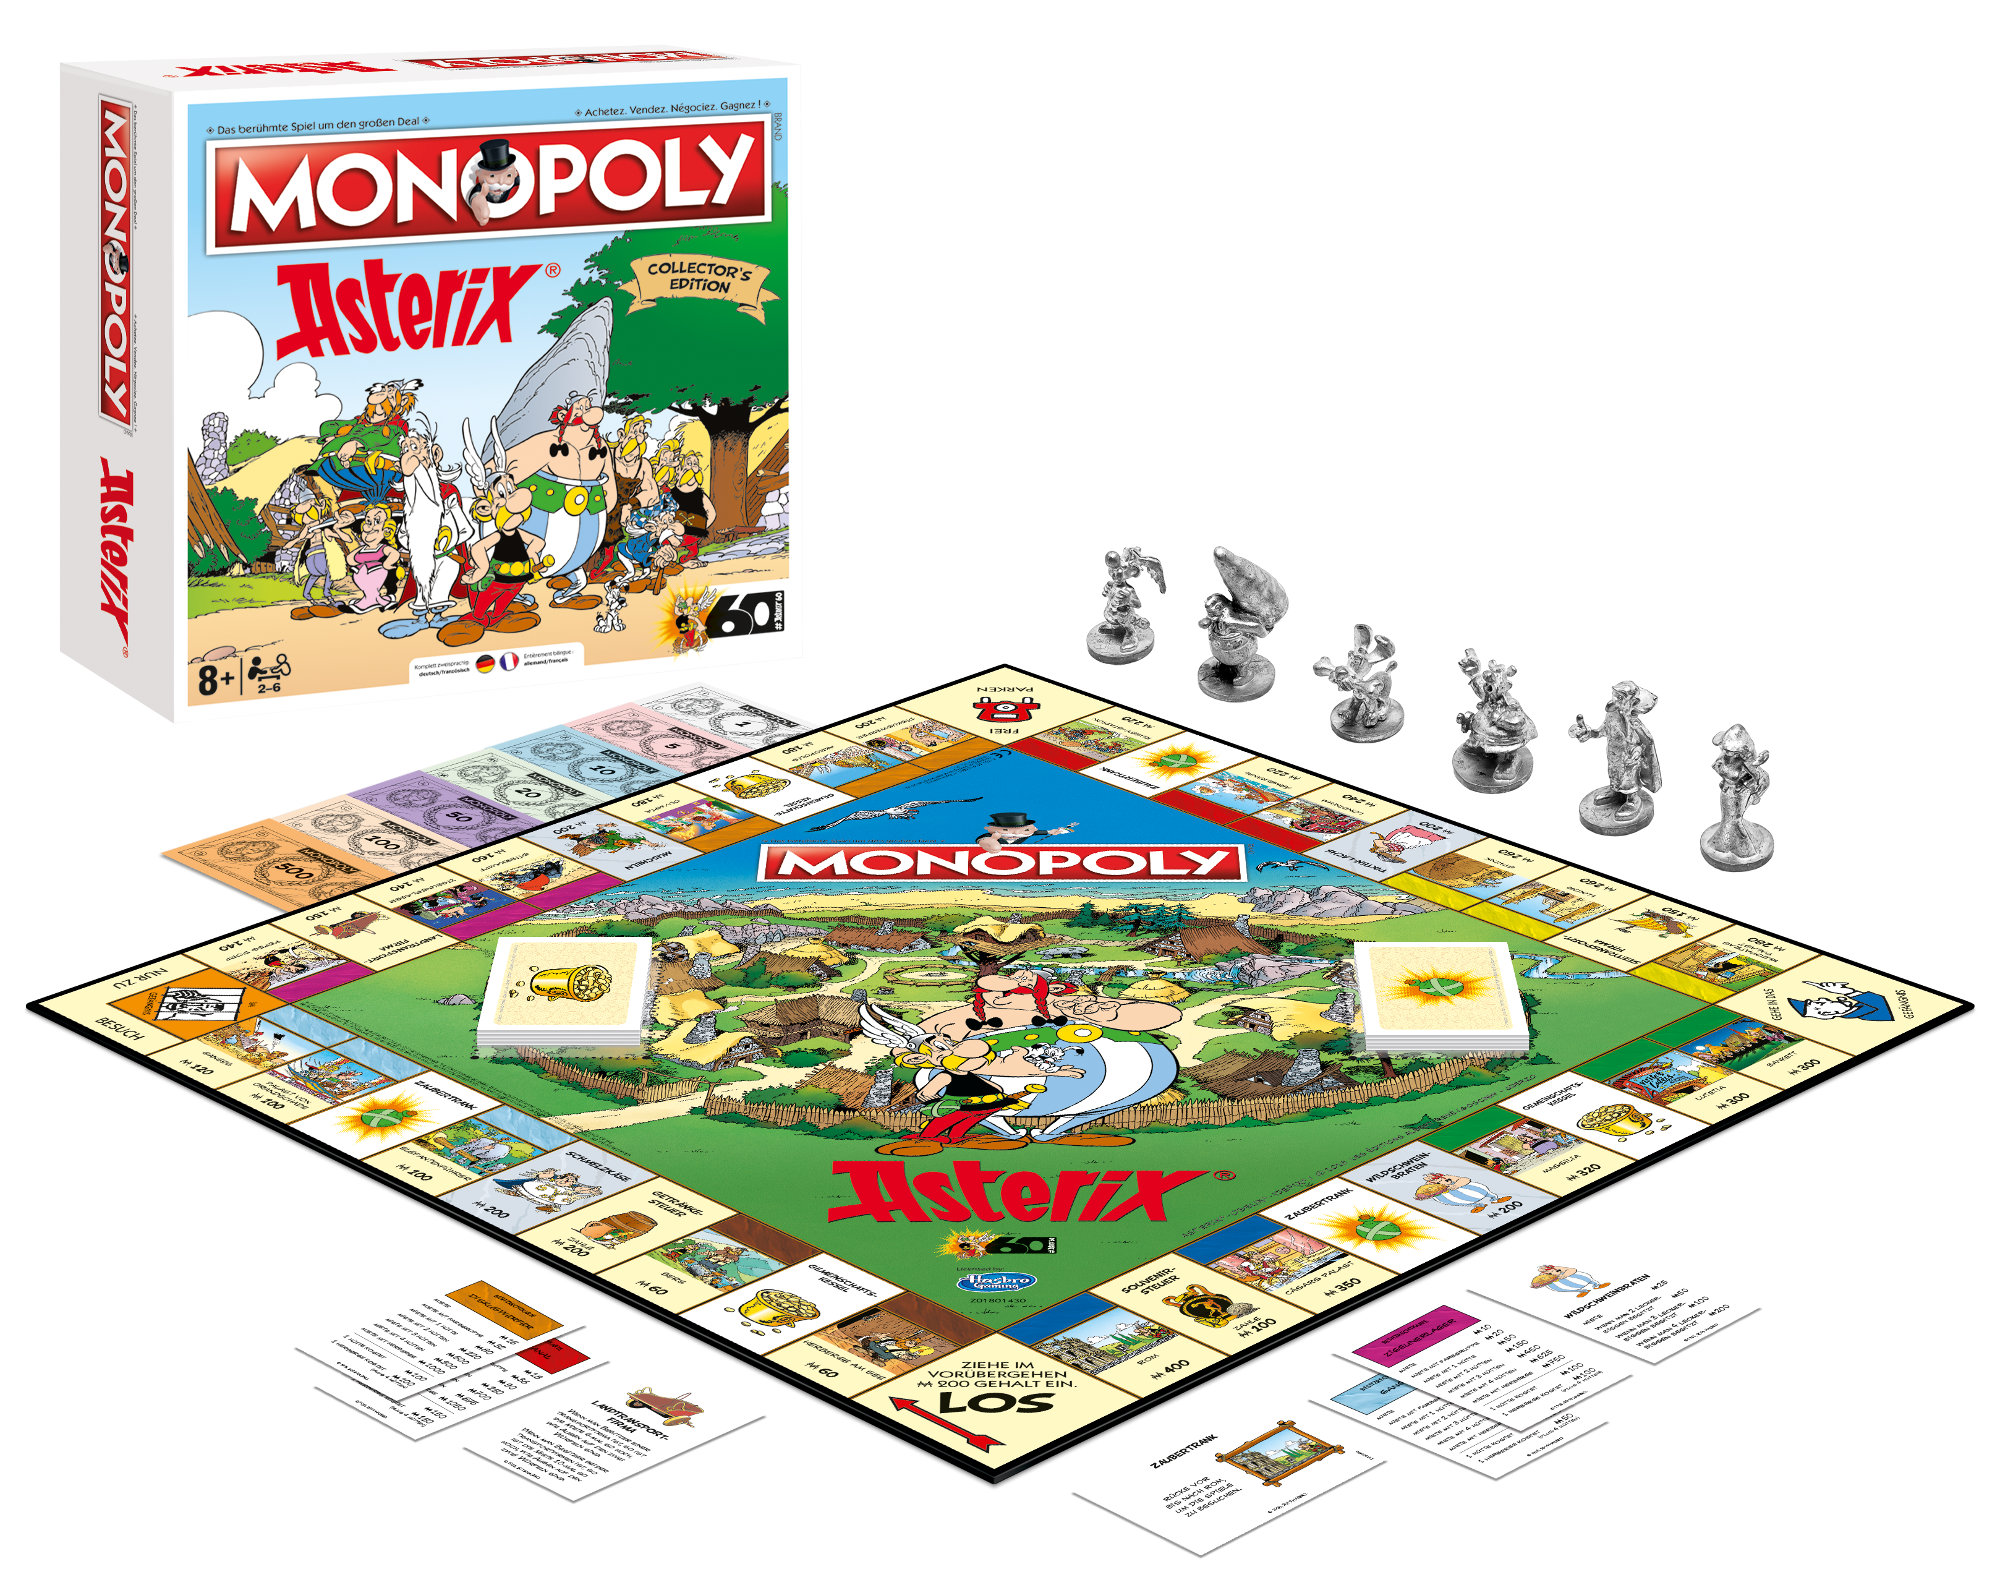 Monopoly Asterix und Obelix Collector's Edition